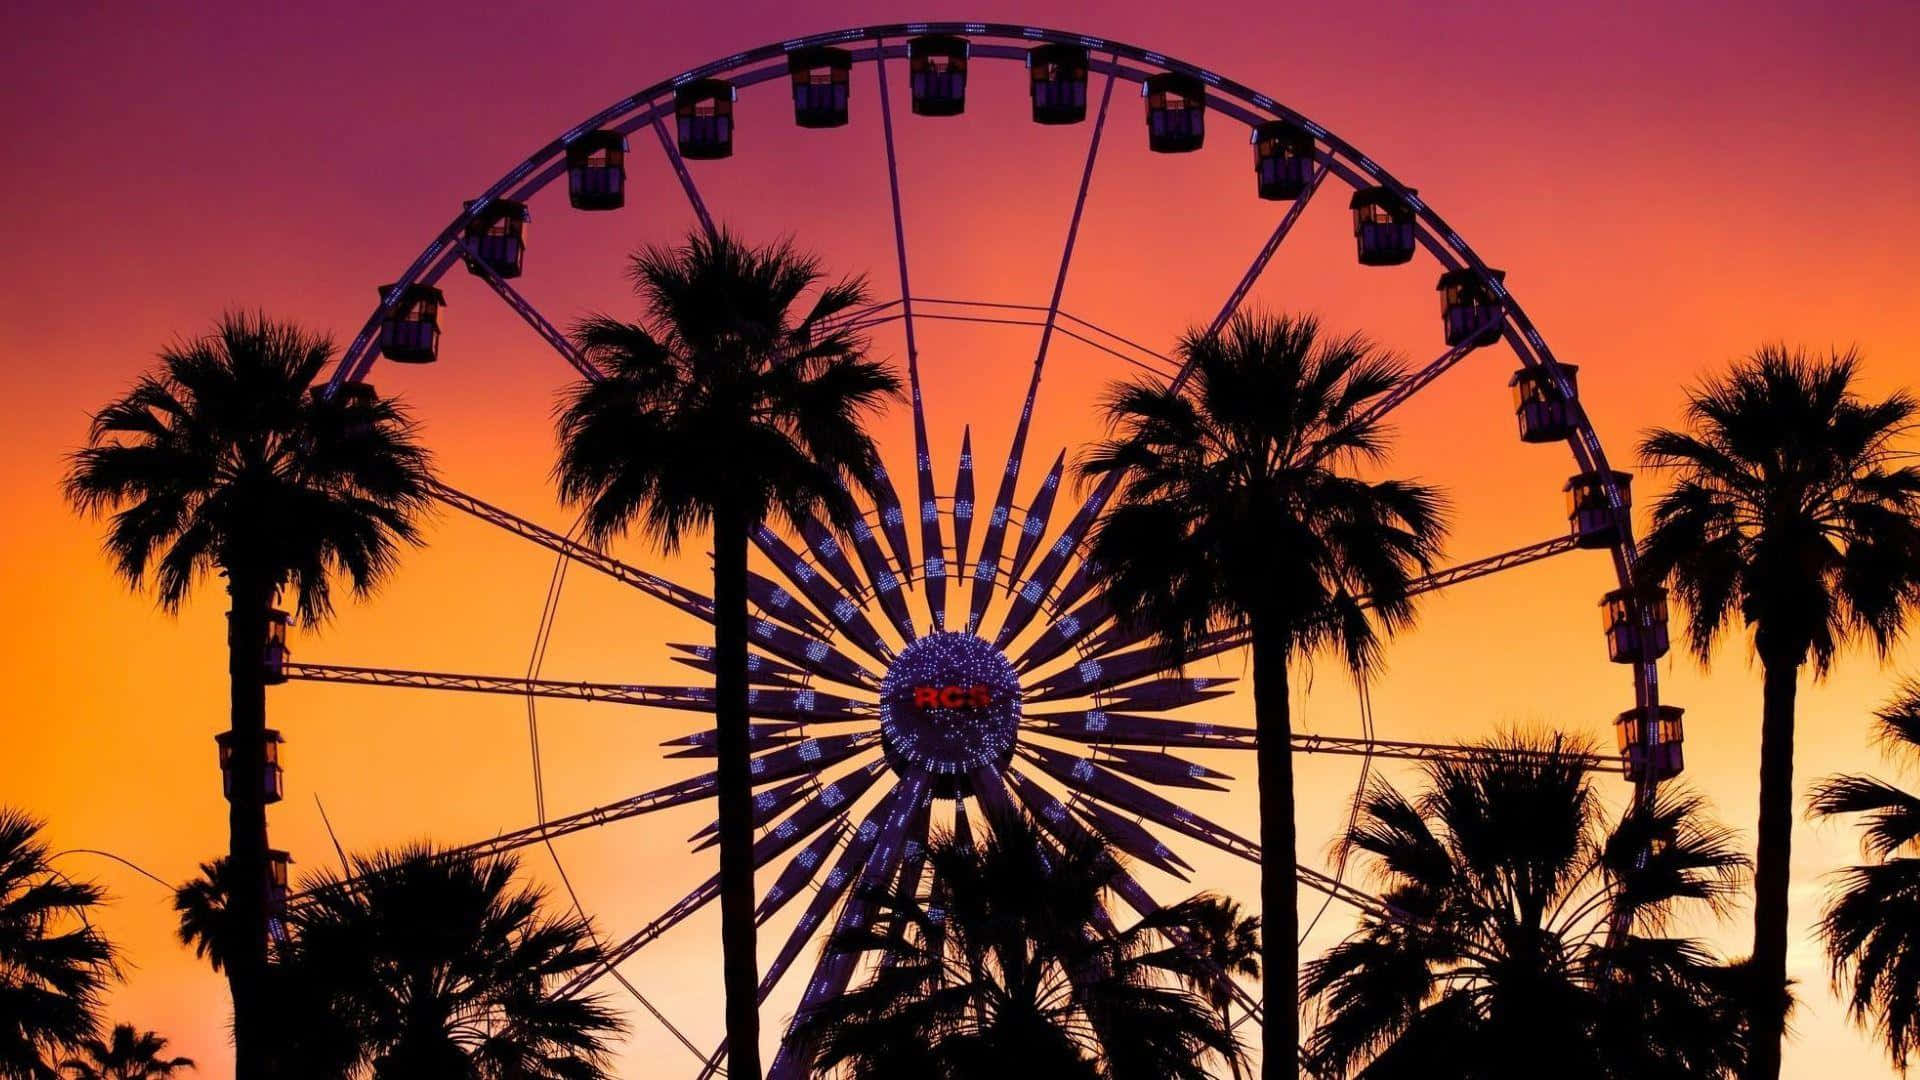 Coachella Ferris Wheel At Sunset